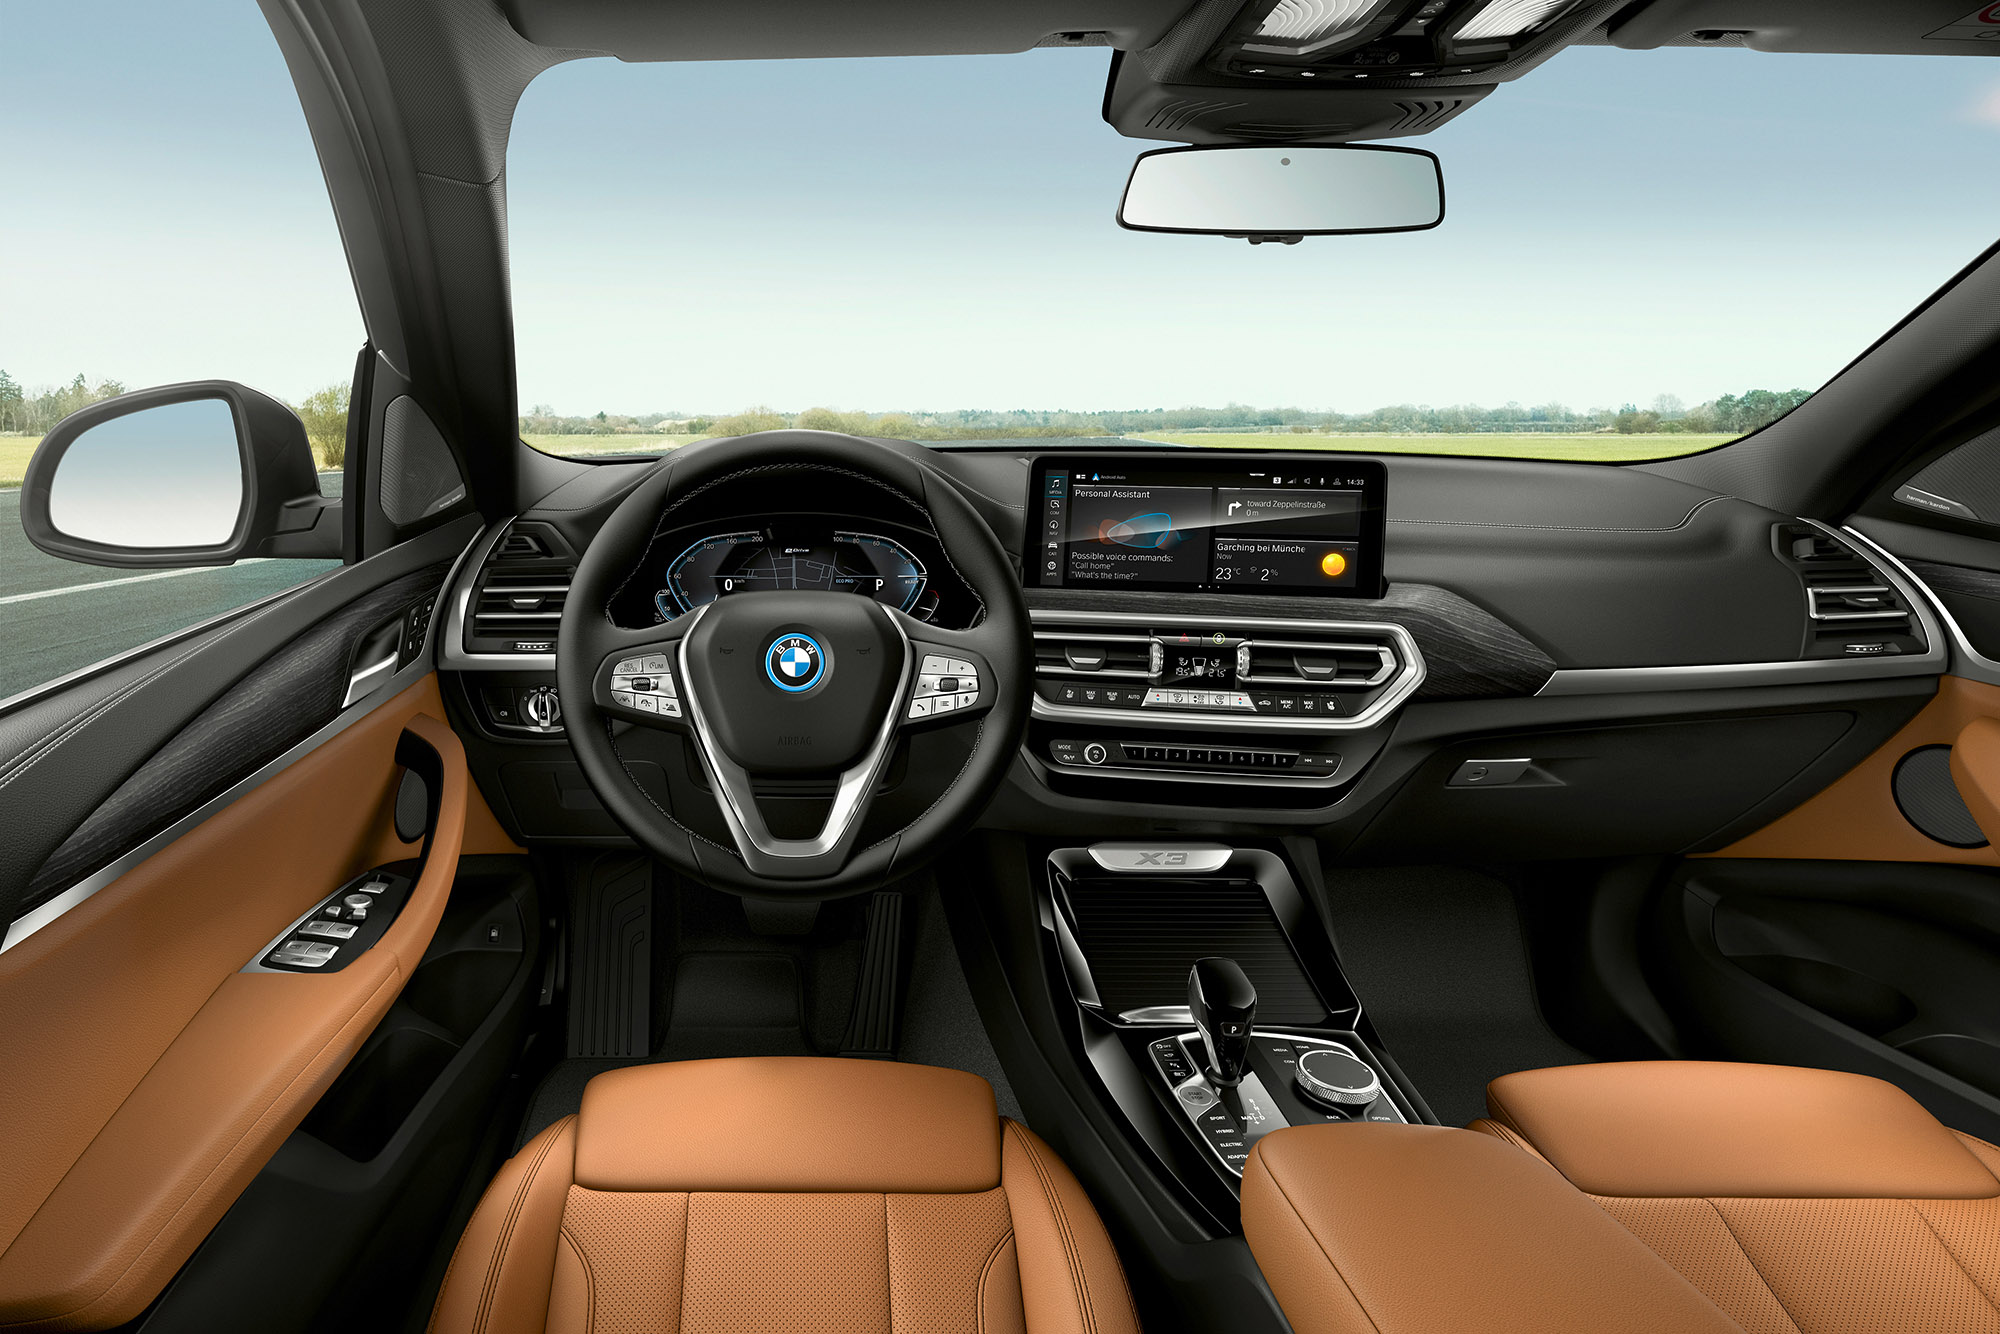 BMW X3 interior in Cognac